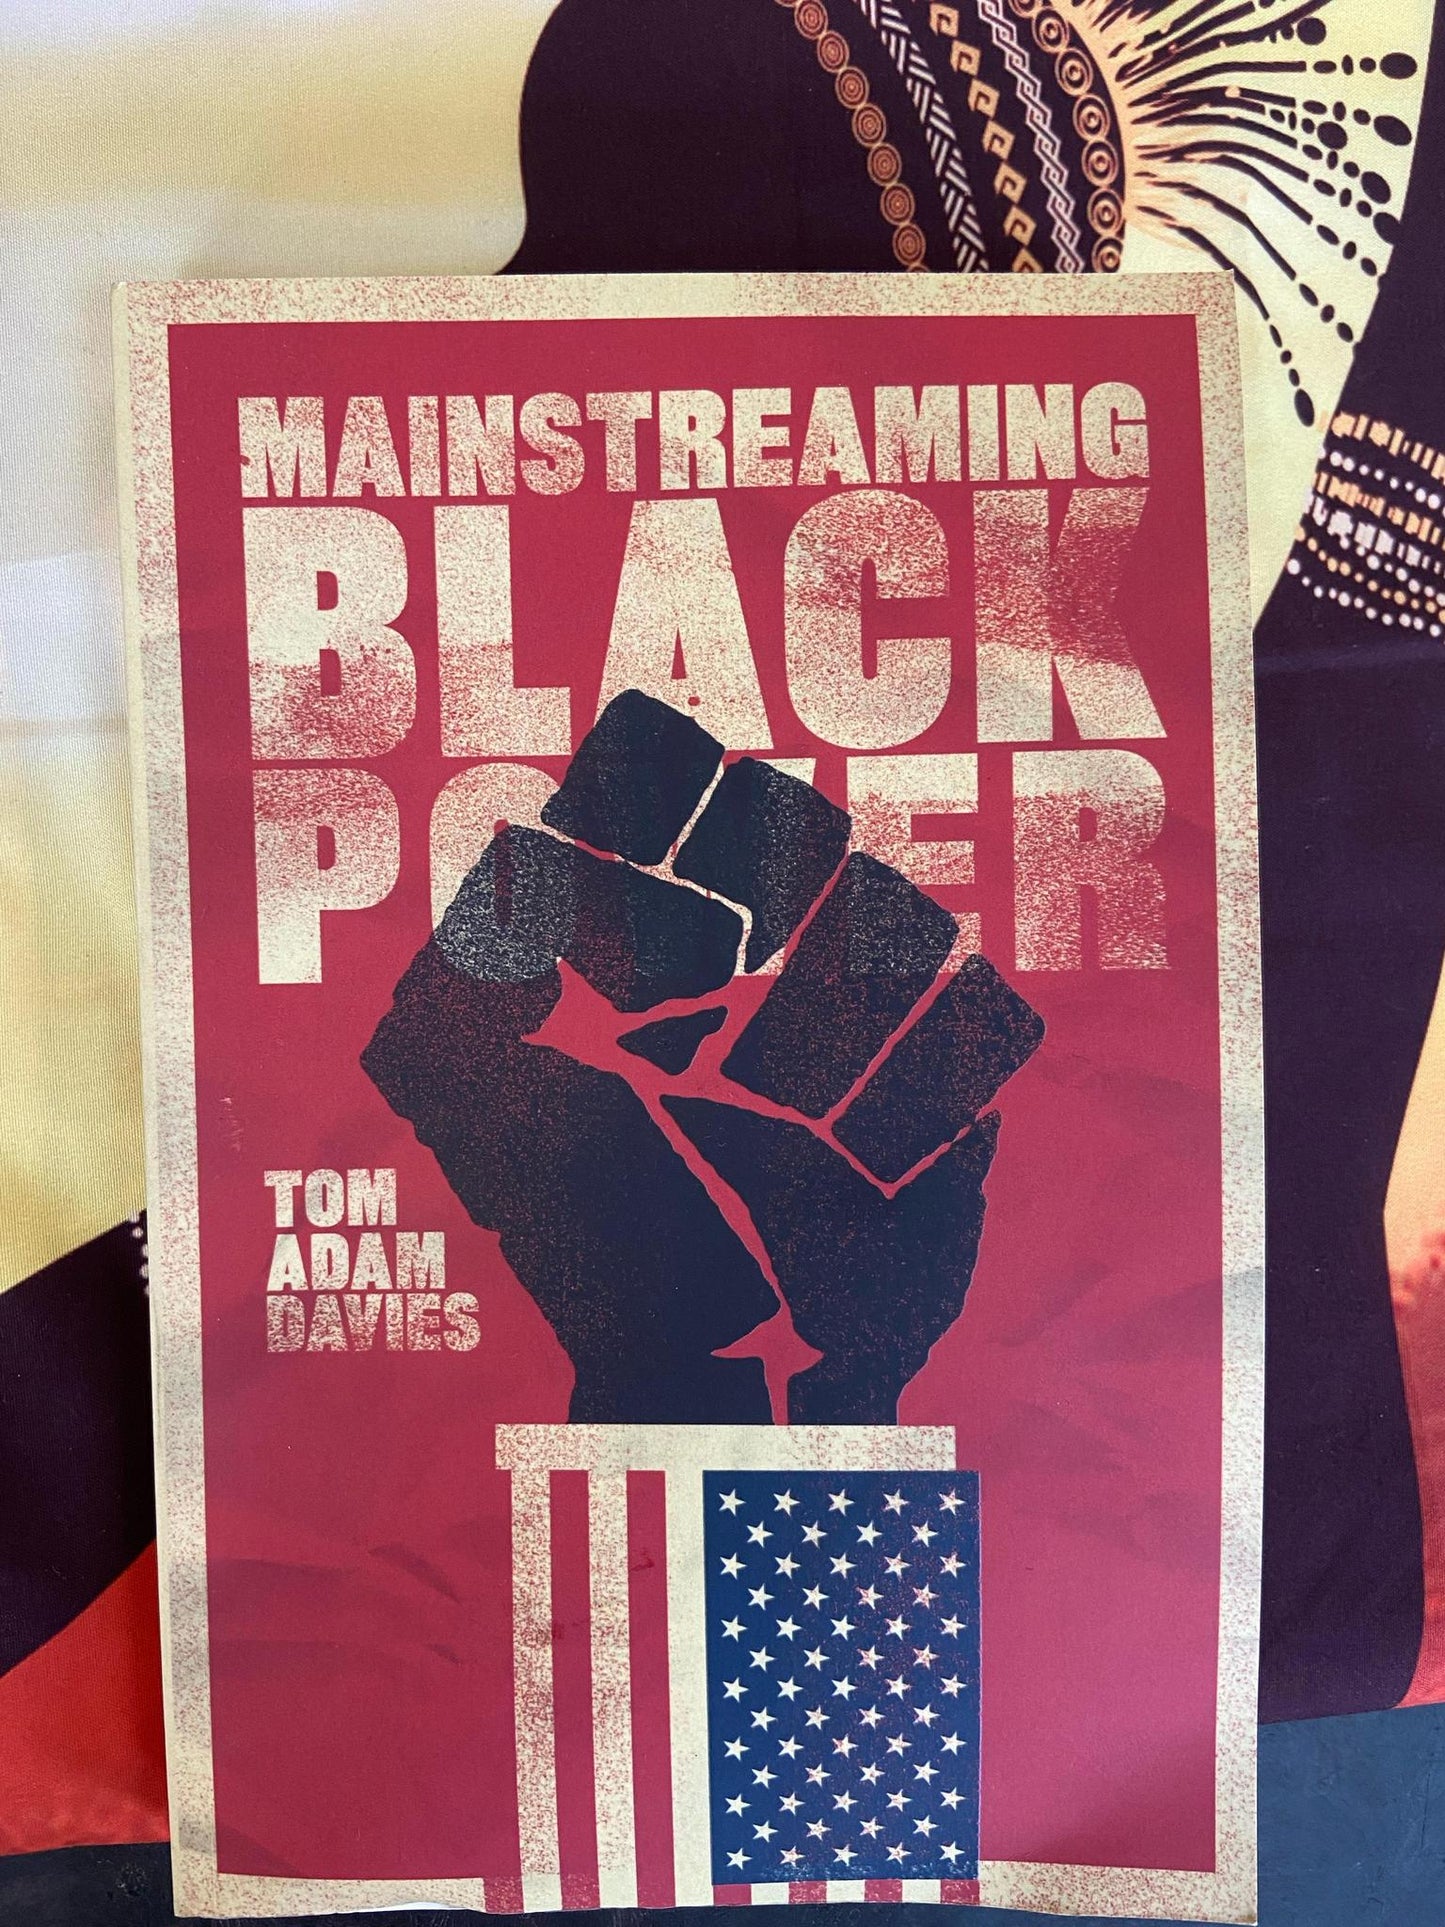 "Mainstreaming Black Power"